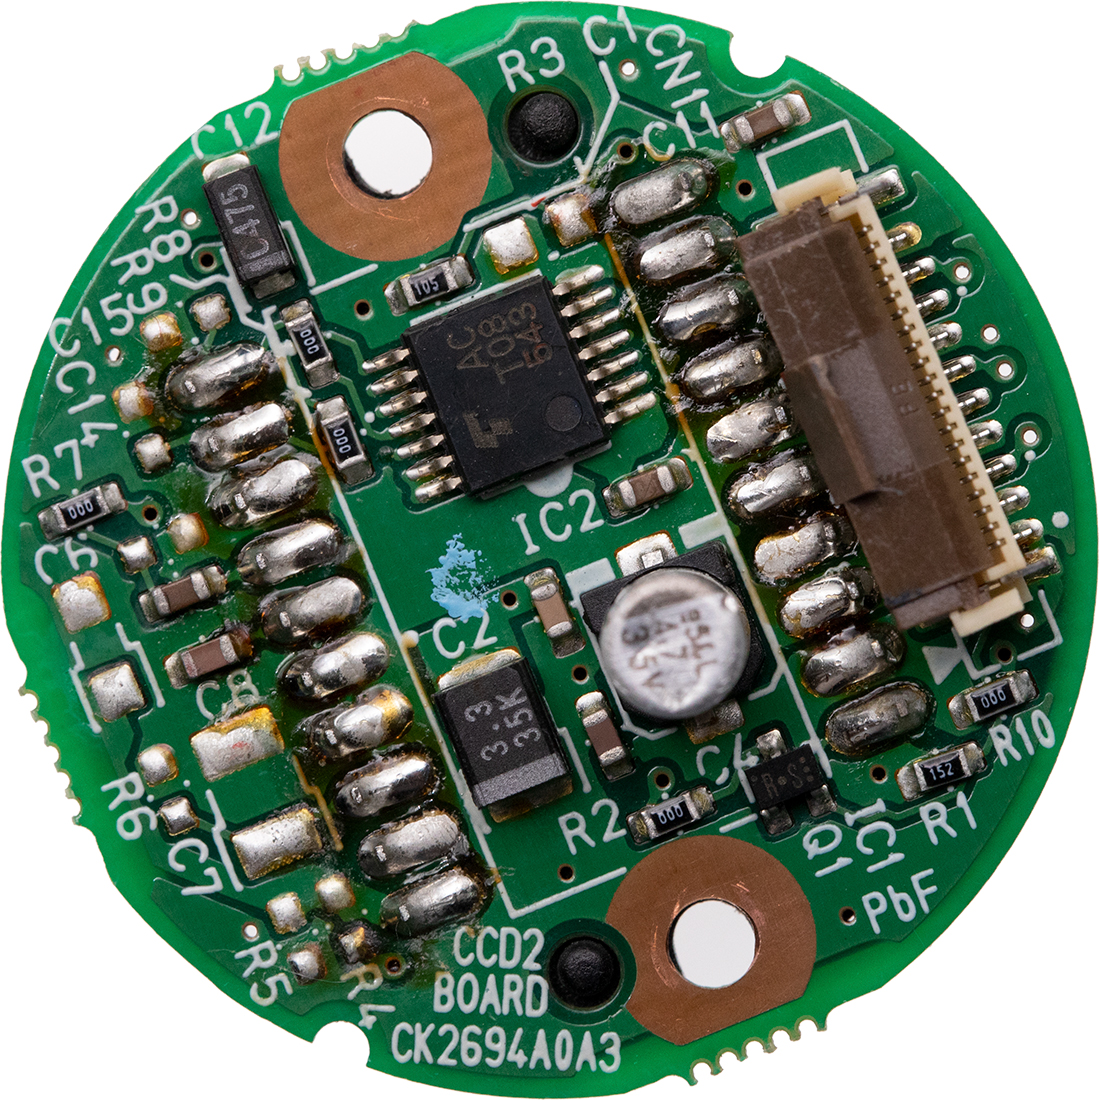 ICX429AKA 0.5inch CCD,索尼SONY 二分之一 CCD,模拟安防监控摄像机CCD SENSOR,大靶面彩色图像传感器模组,大尺寸CCD ,SONY CCD代理商